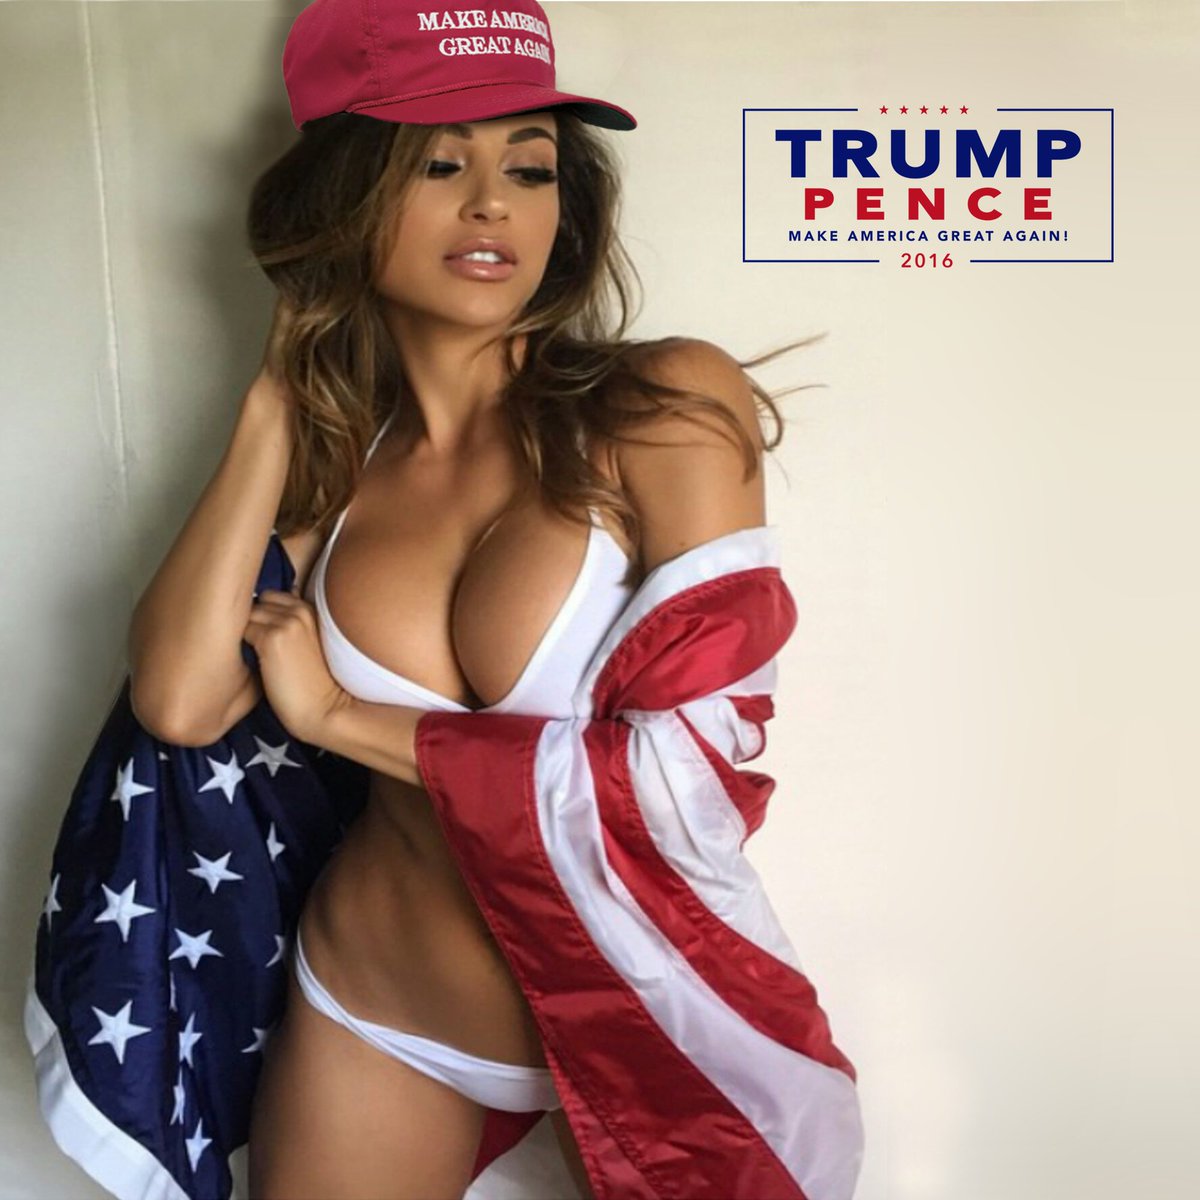 maga bikinis - Make Amb Great Agan Trump Pence Make America Great Again! 2016